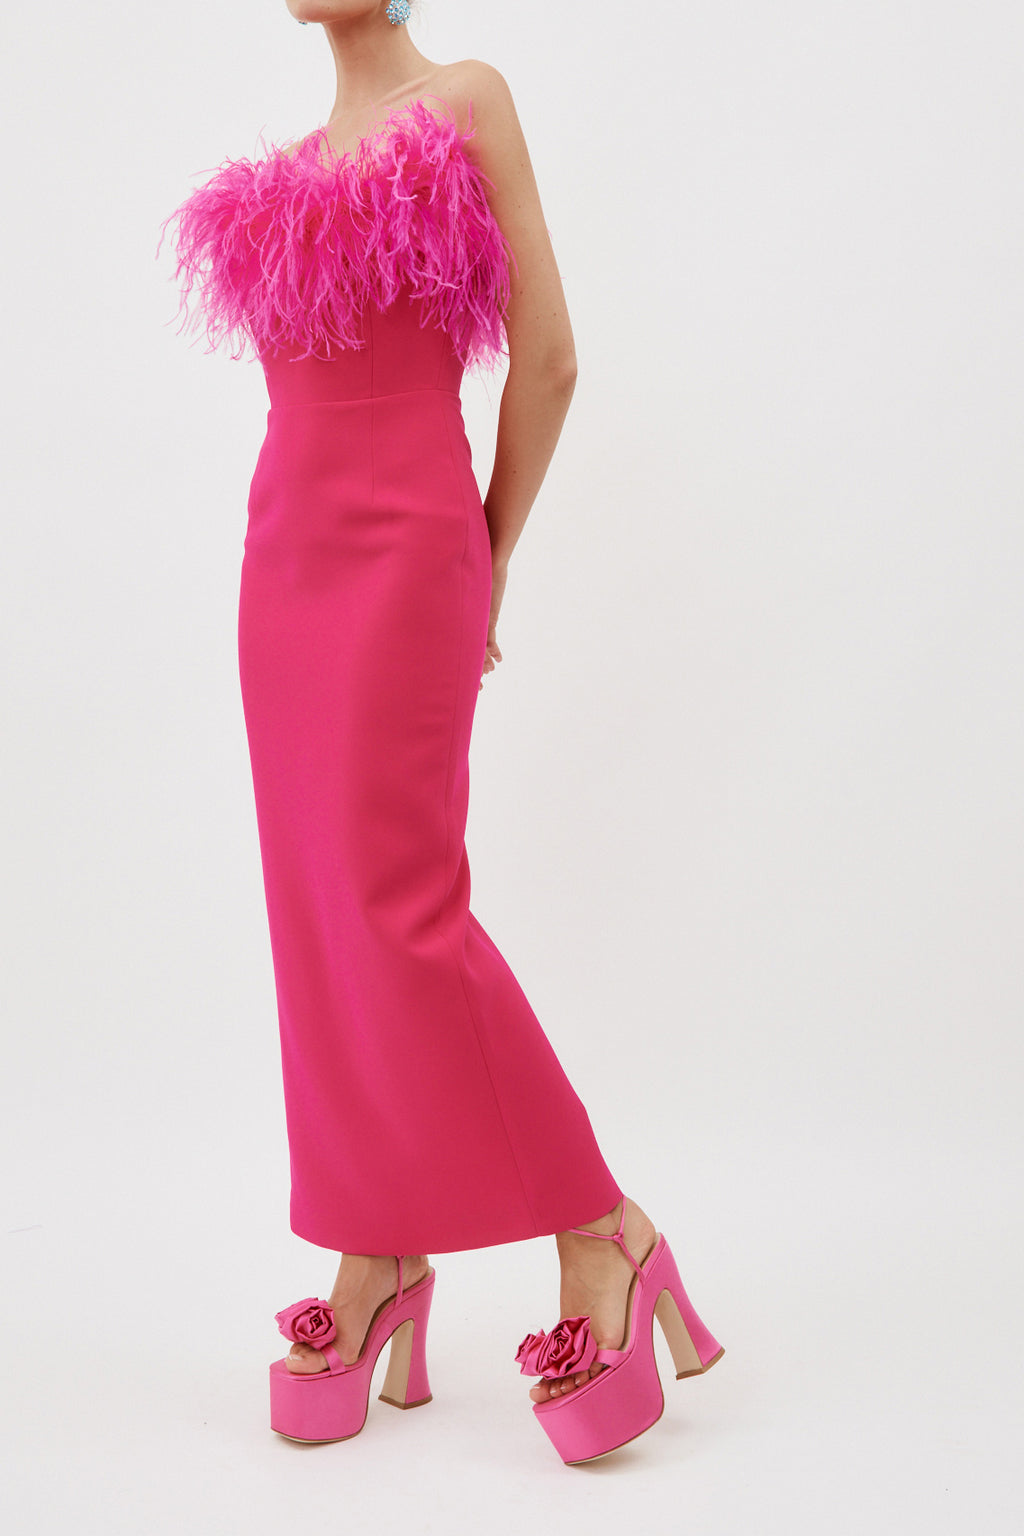 Lena Hot Pink Dress